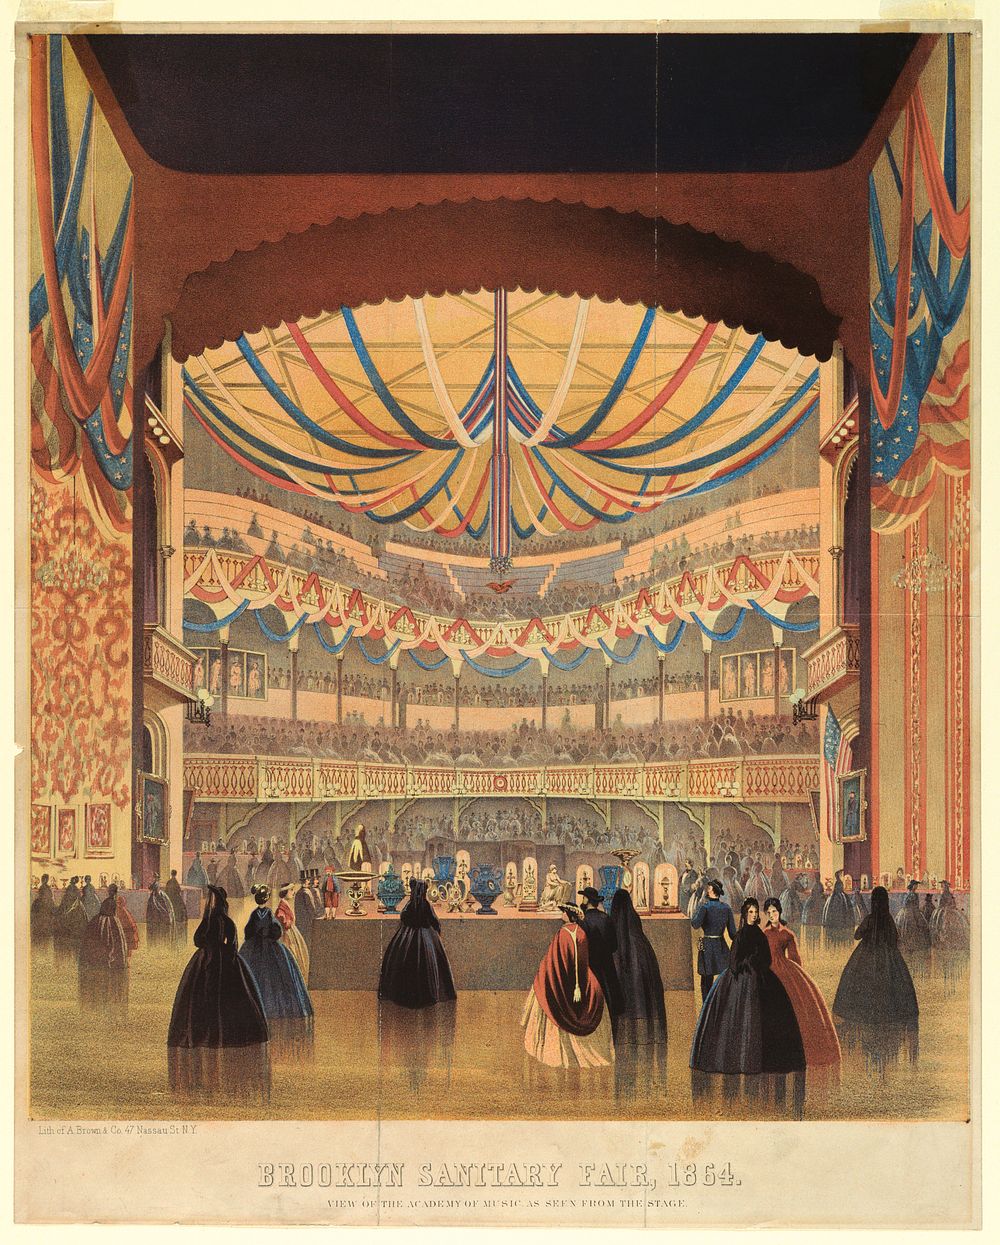 Brooklyn Sanitary Fair of 1864, the Academy of Music